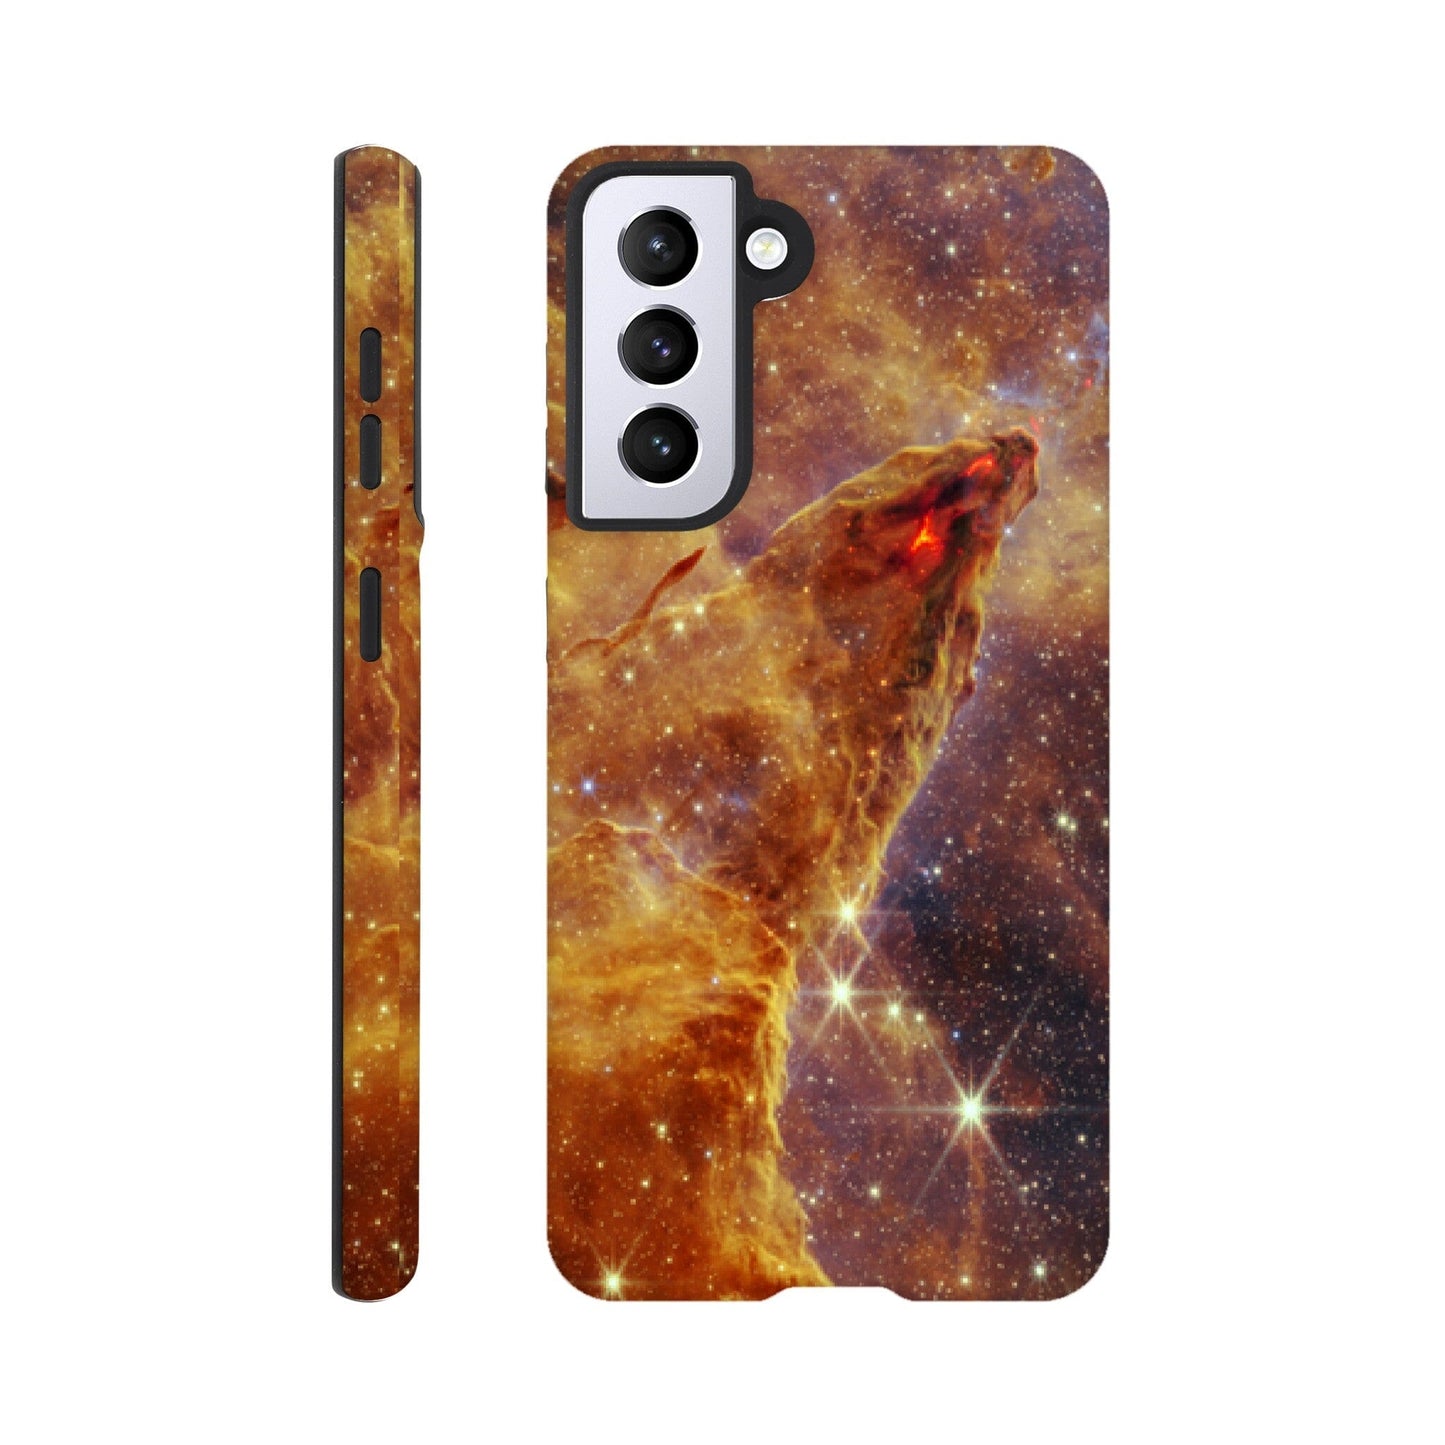 NASA - Phone Case Tough - 9. Pillars of Creation (NIRCam Image) - James Webb Space Telescope Phone Case TP Aviation Art Galaxy S21 